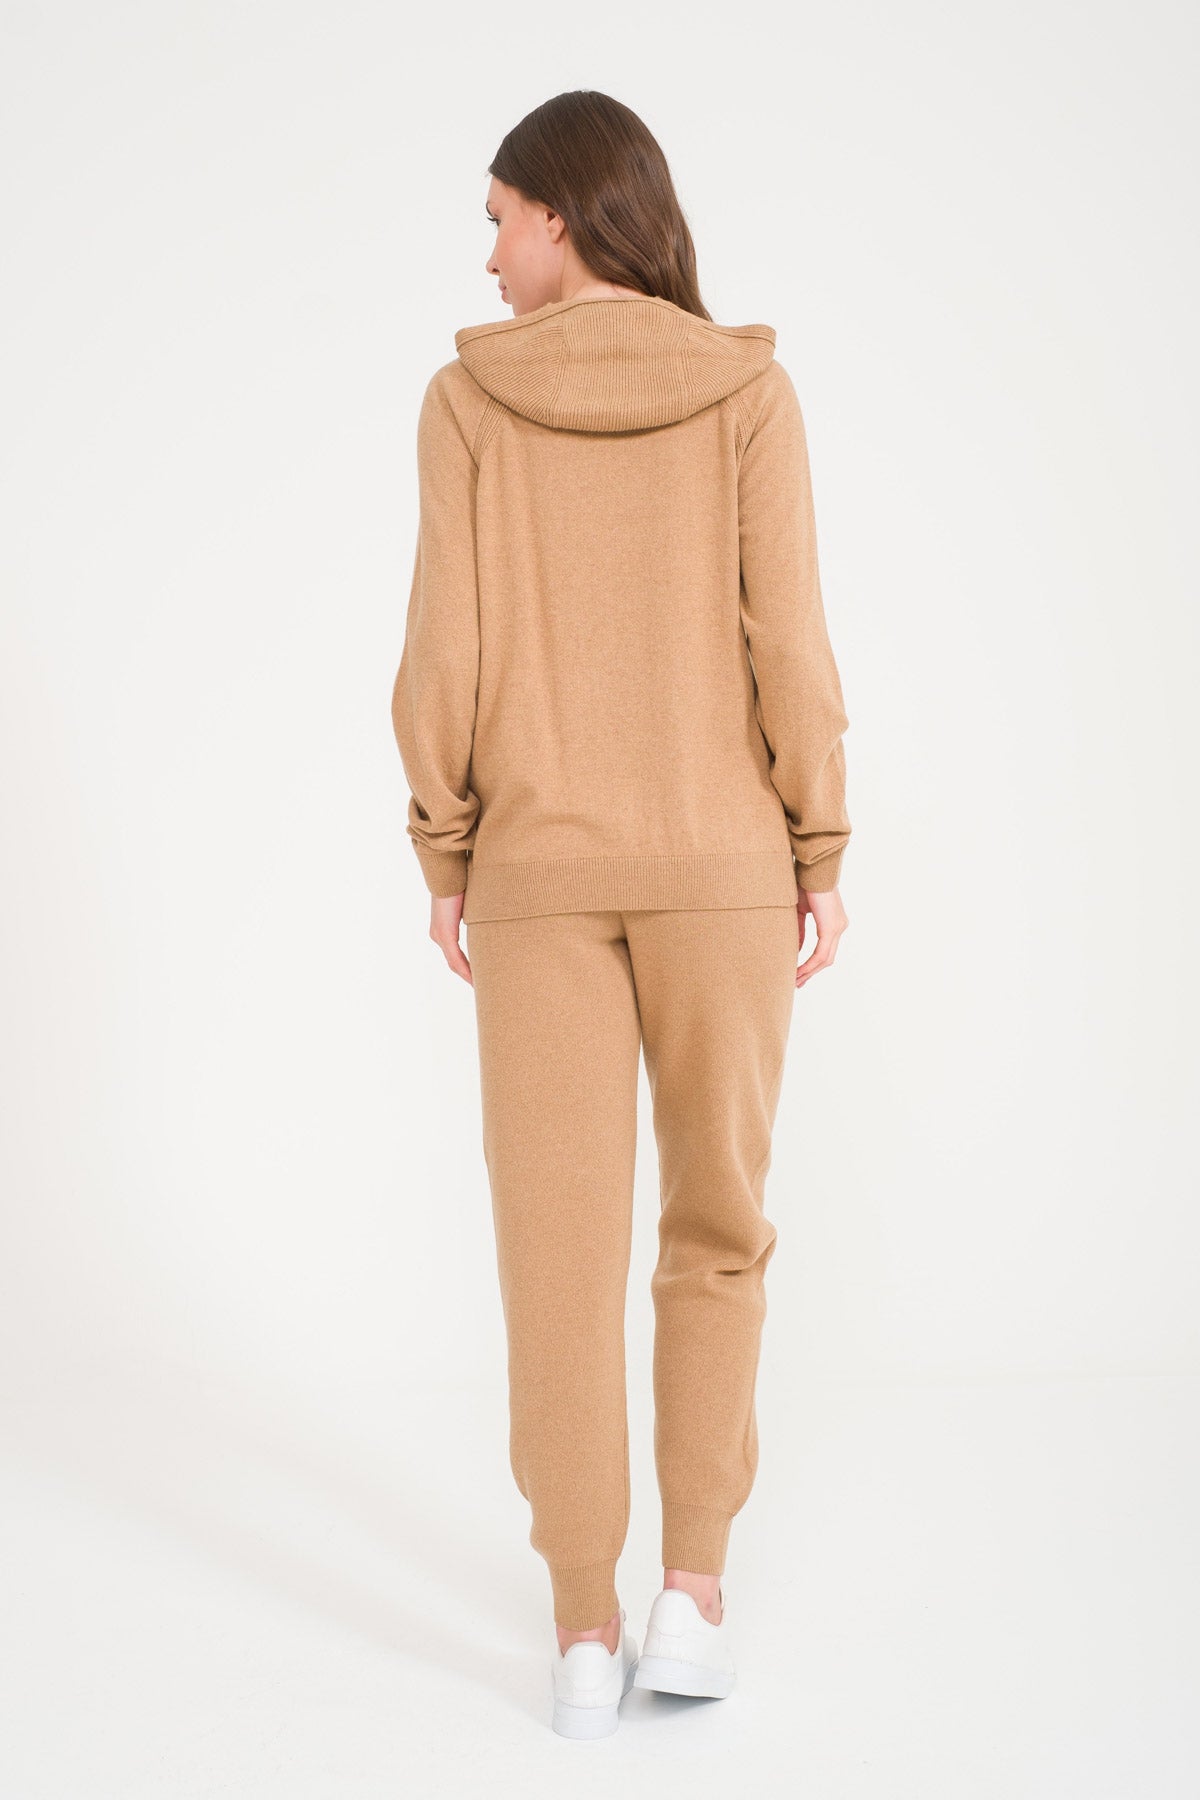 Camel Knit Sweater & Pants Set